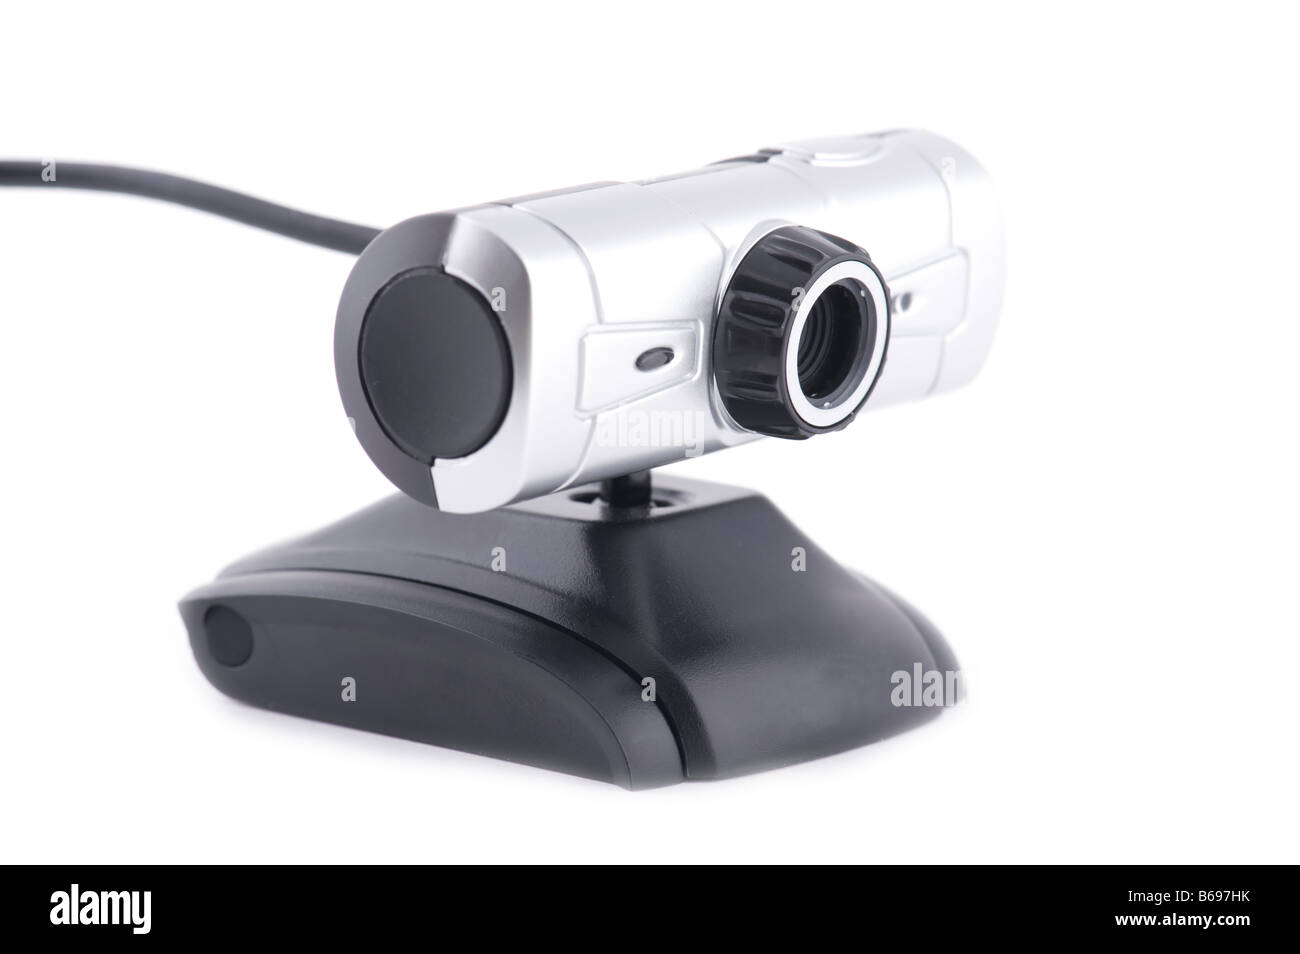 Genius eye 312. Веб-камера Genius Eye 312. Драйвера на веб камеру Genius Eye 312. Web камера Genius Eye 312. Драйвер на камеру Genius Eye 312.